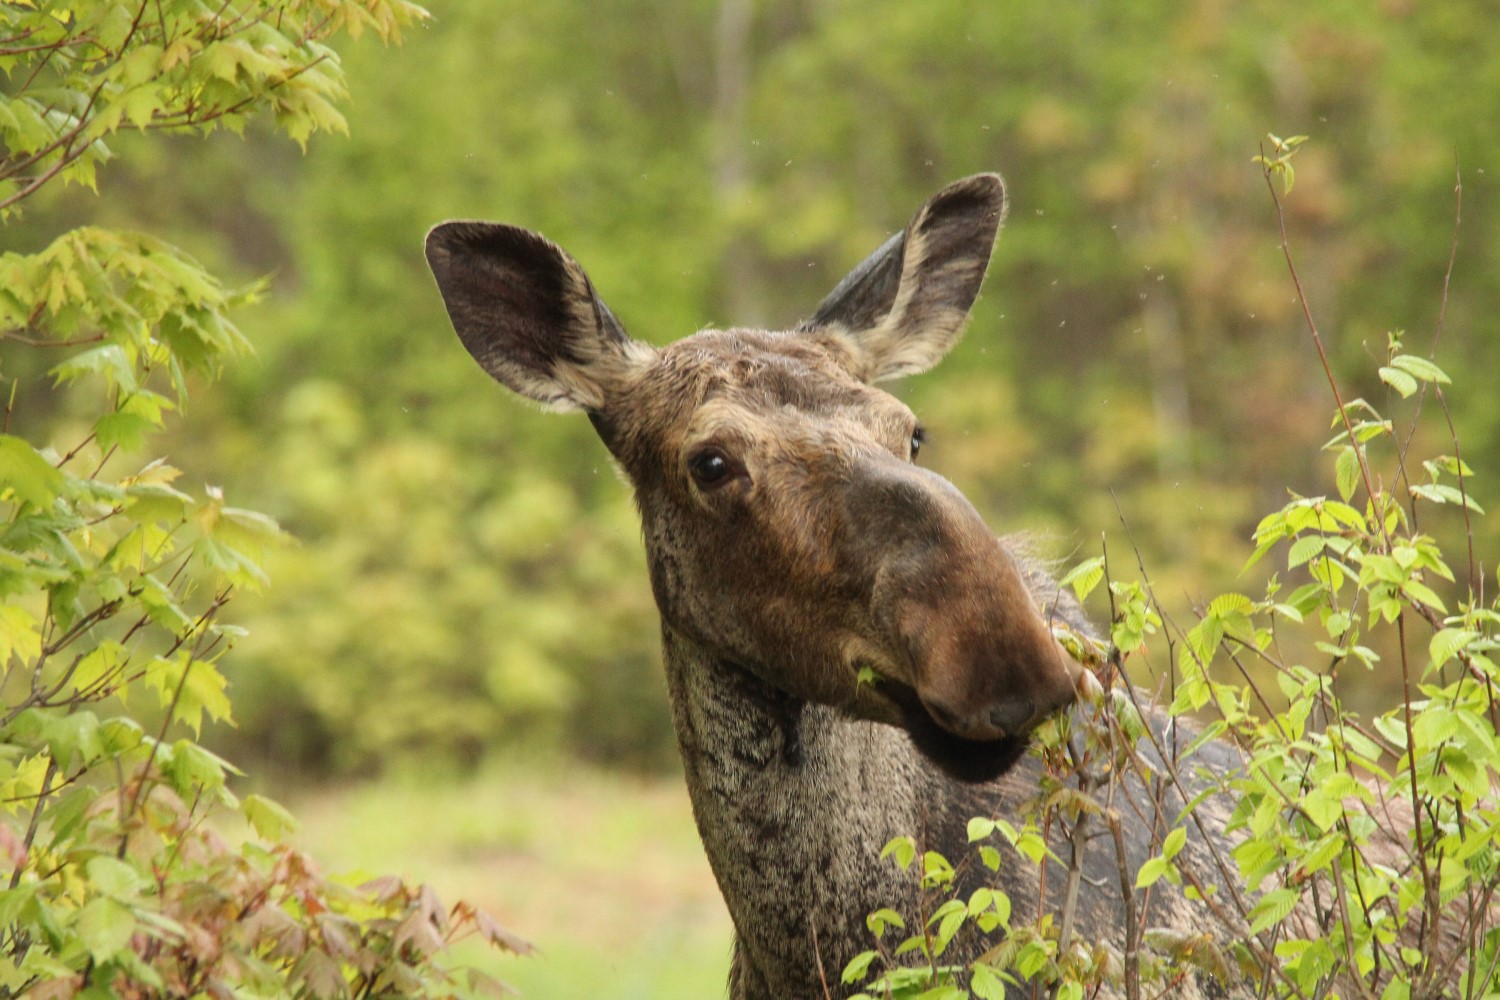 A moose standing amid greenery looking at camera.